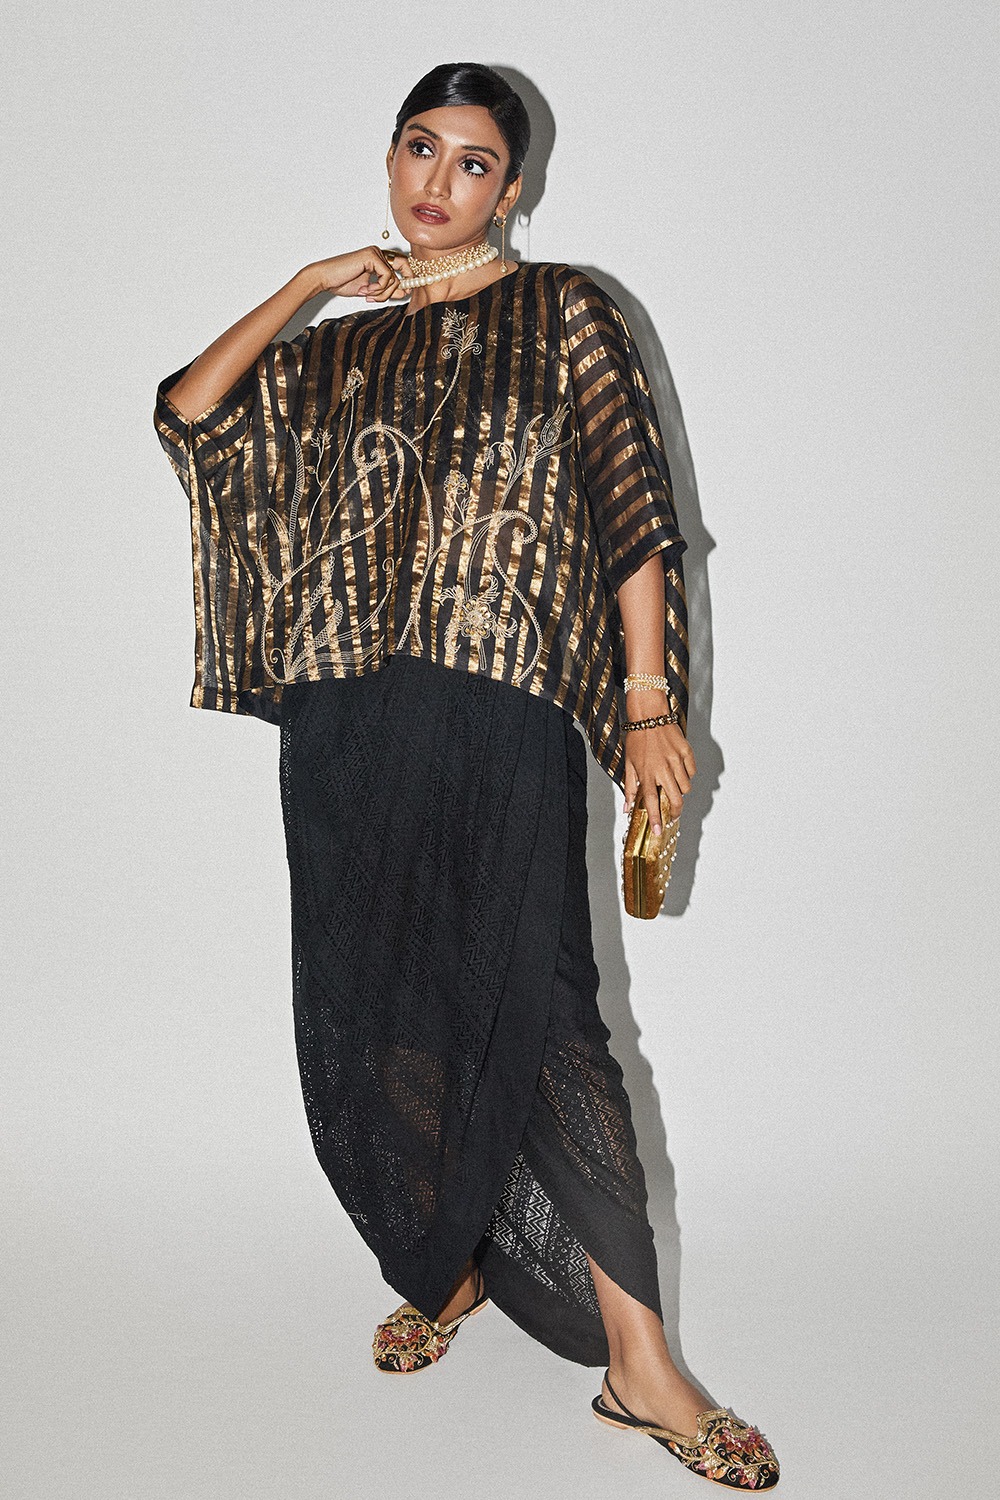 Black & Gold Embroidered Kaftan Top & Lace Skirt Set